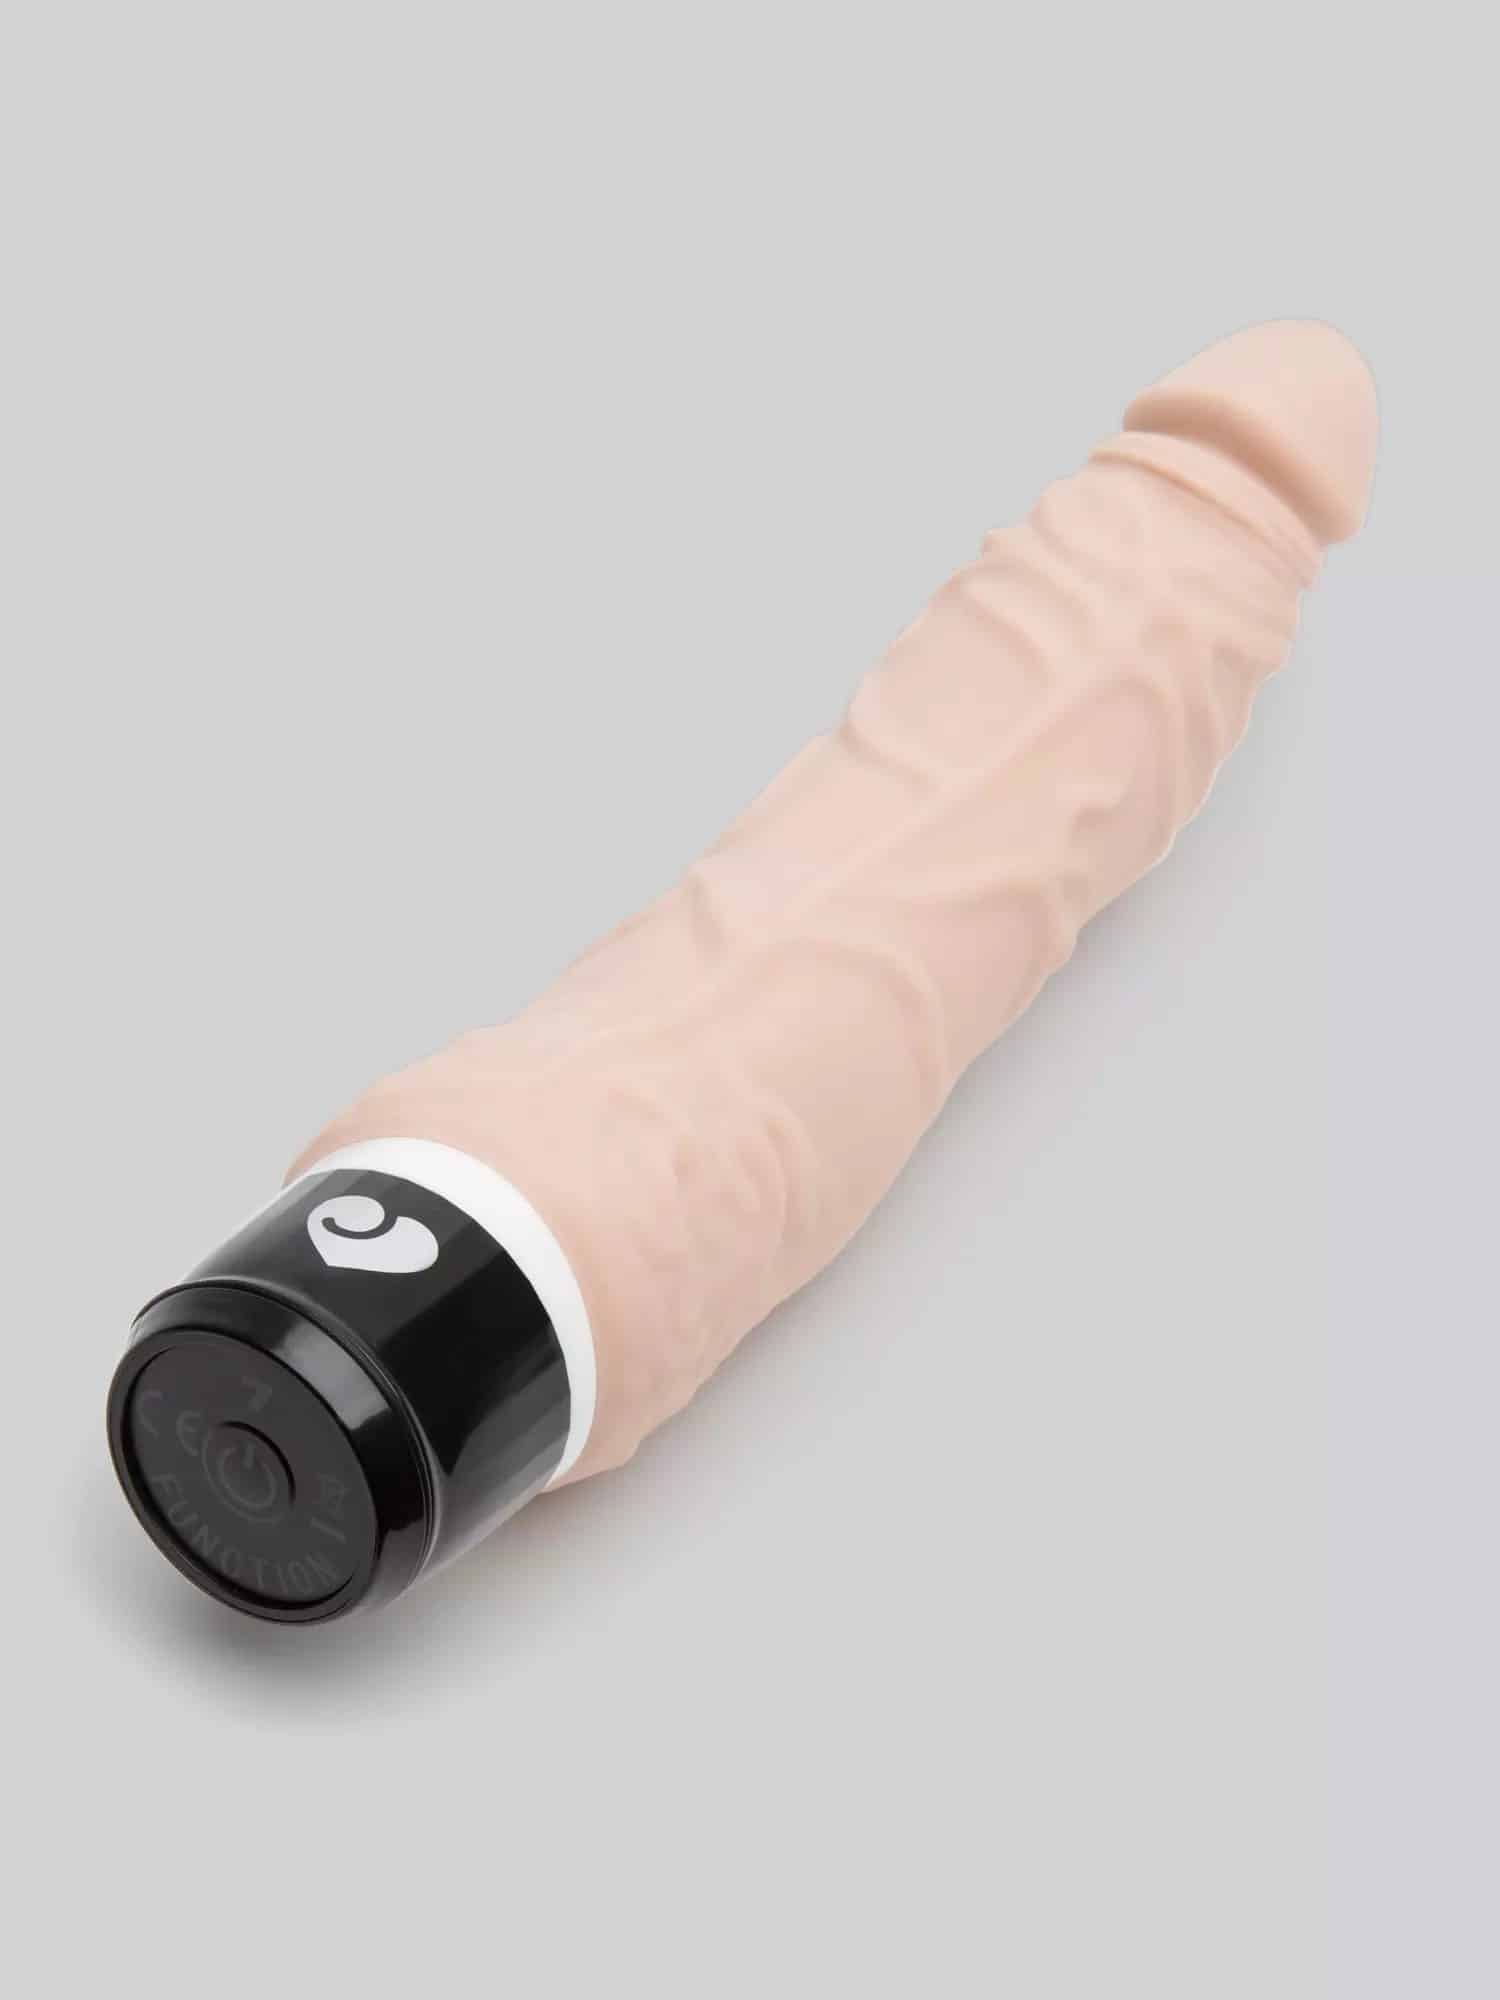 Product Lovehoney Silicone 7 Function Slim Realistic Dildo Vibrator 